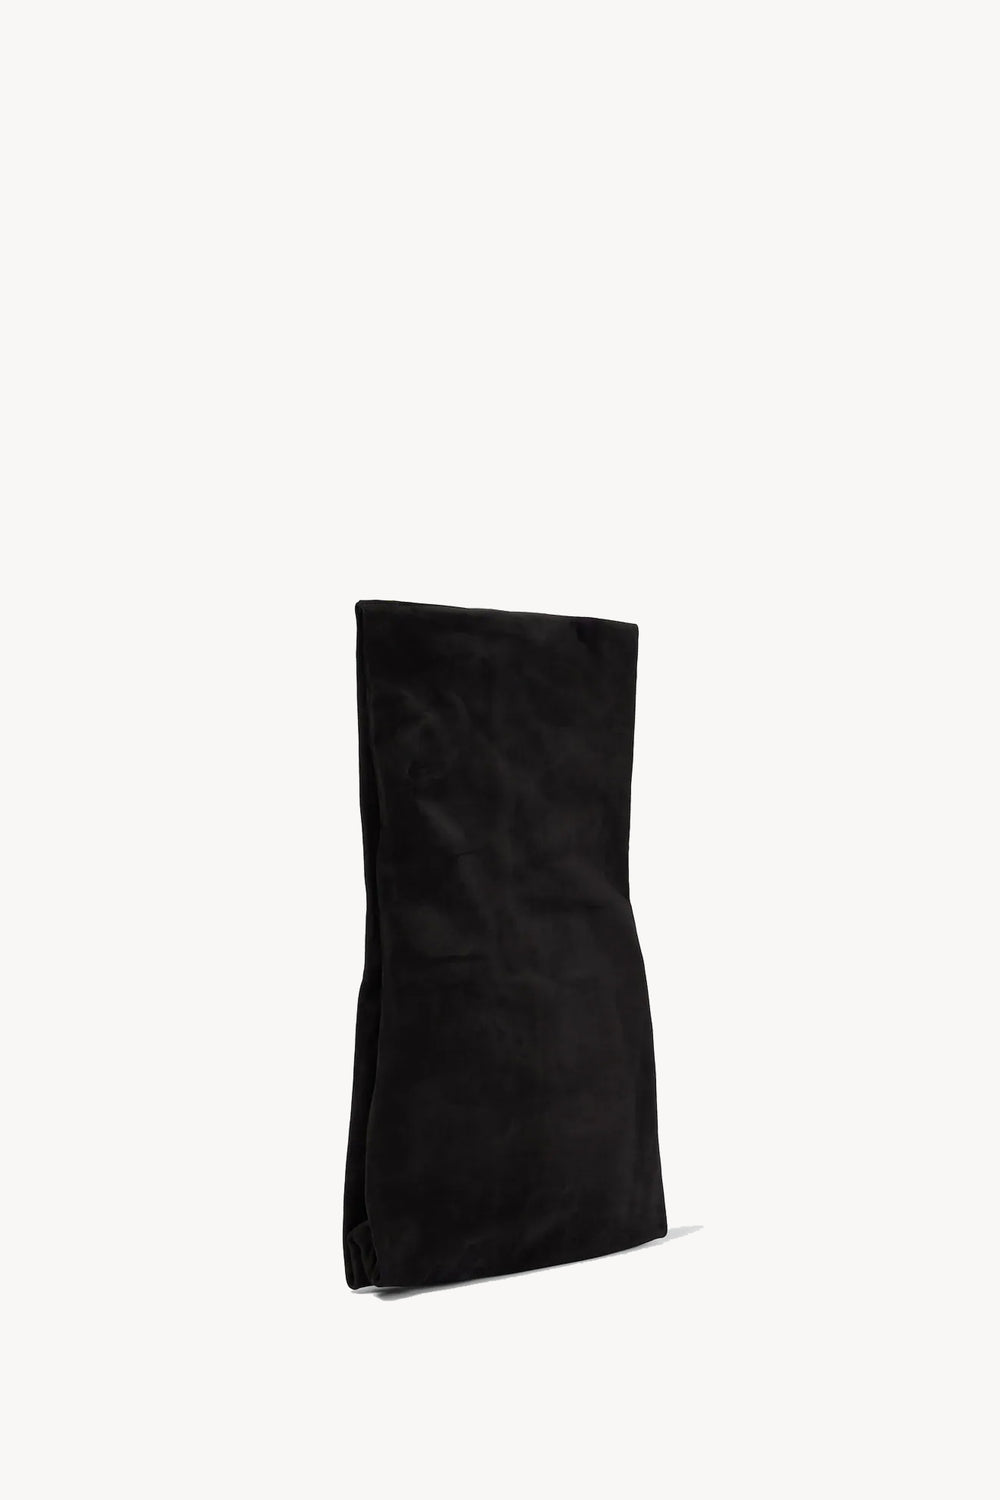 Small Glove Bag Black Suede - Ileana Makri